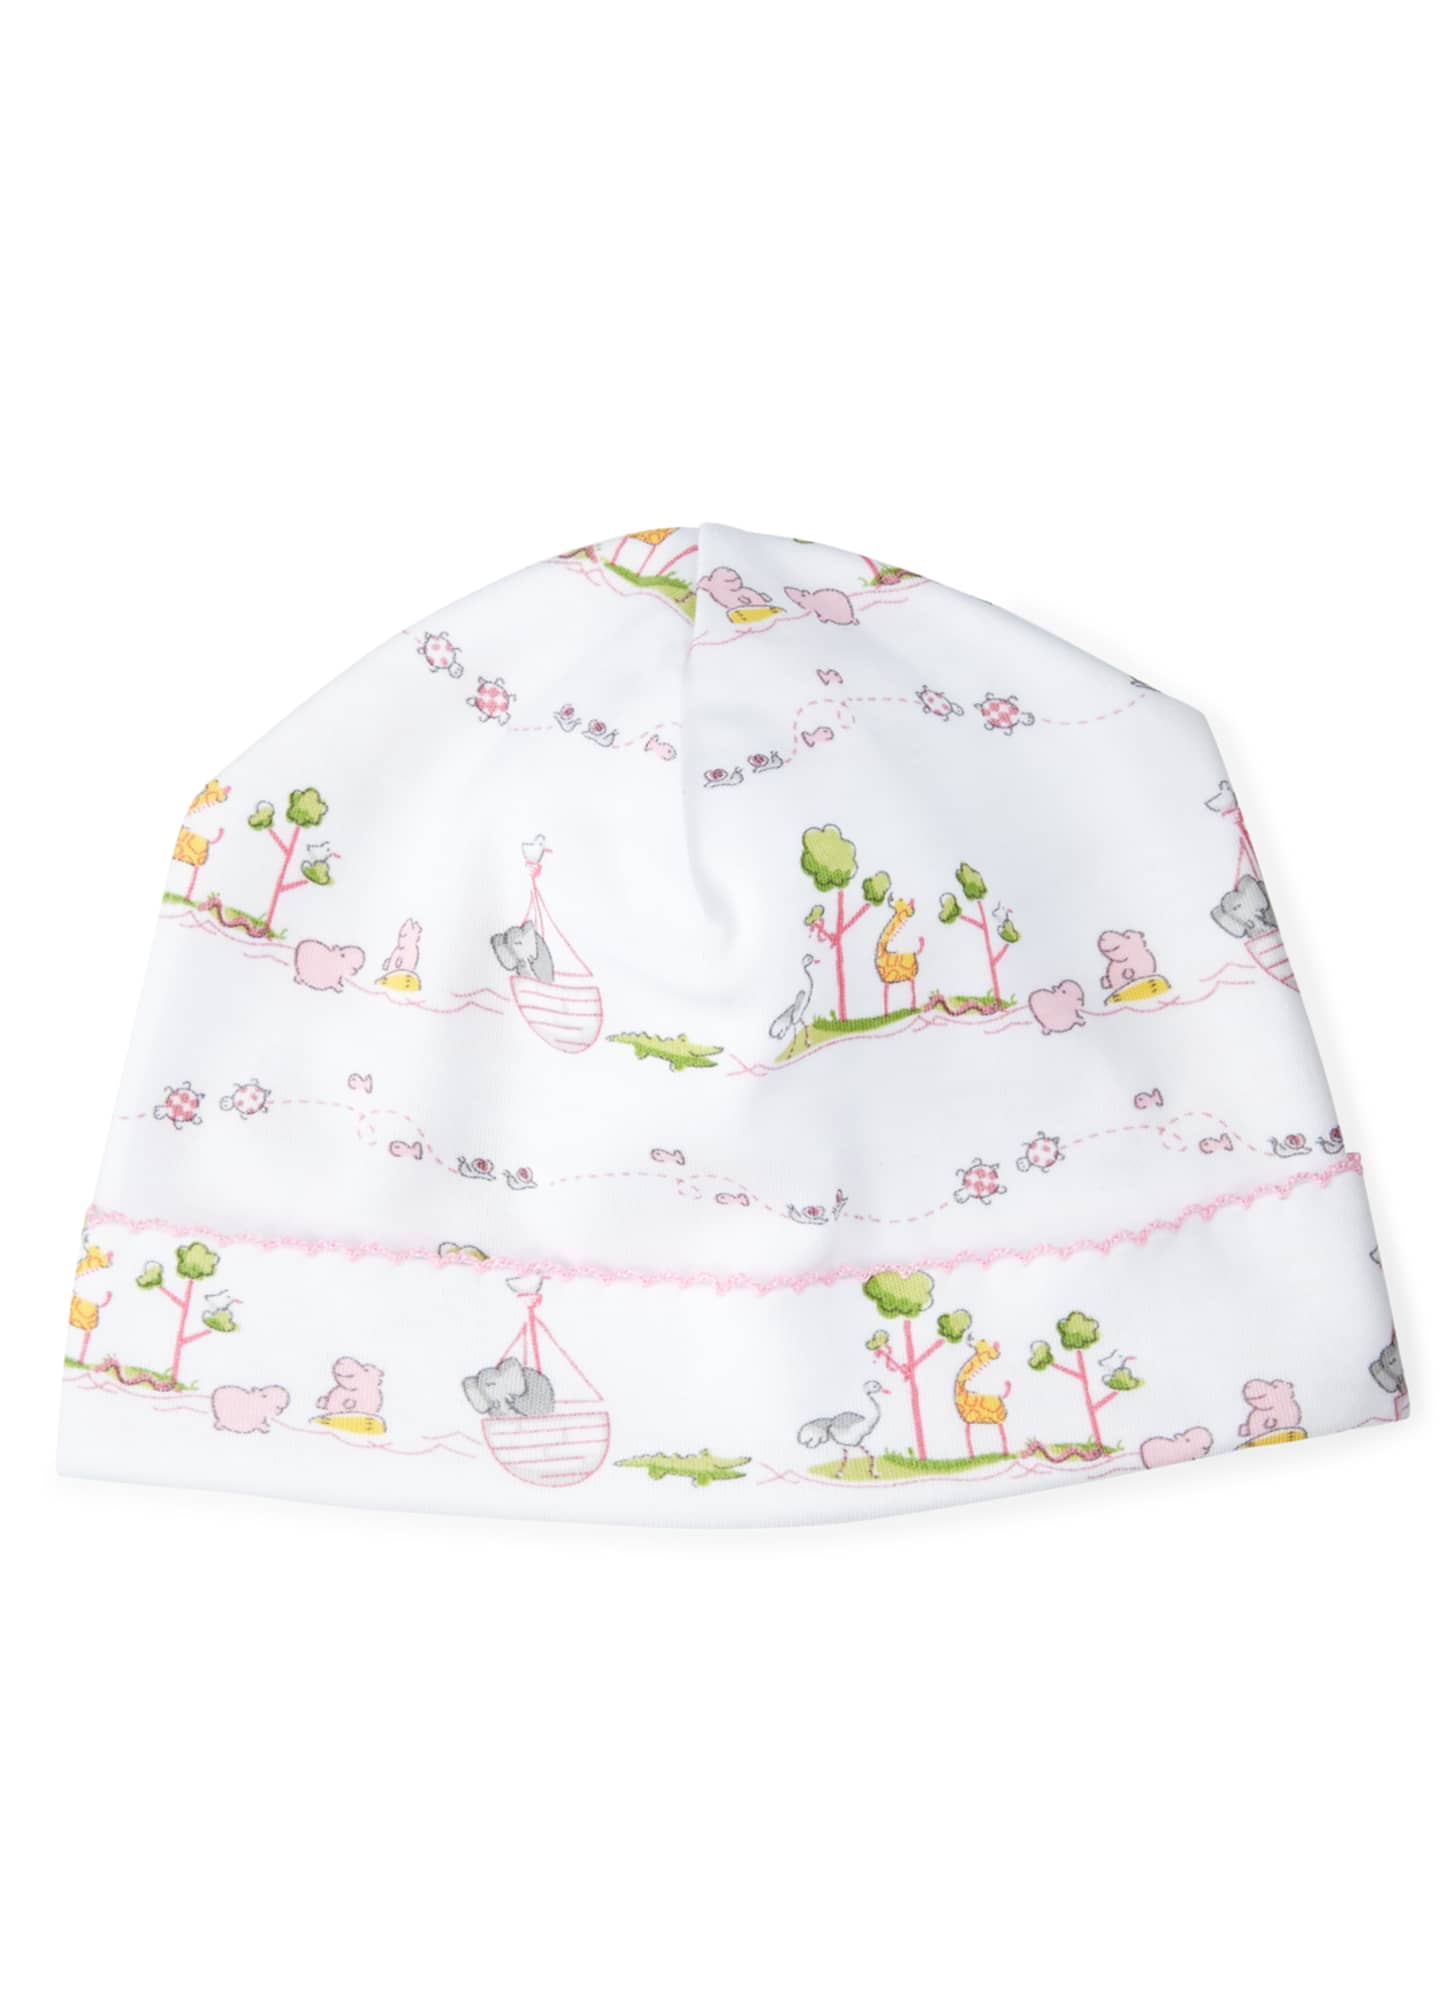 Noah's Ark Light Pink Printed Hat